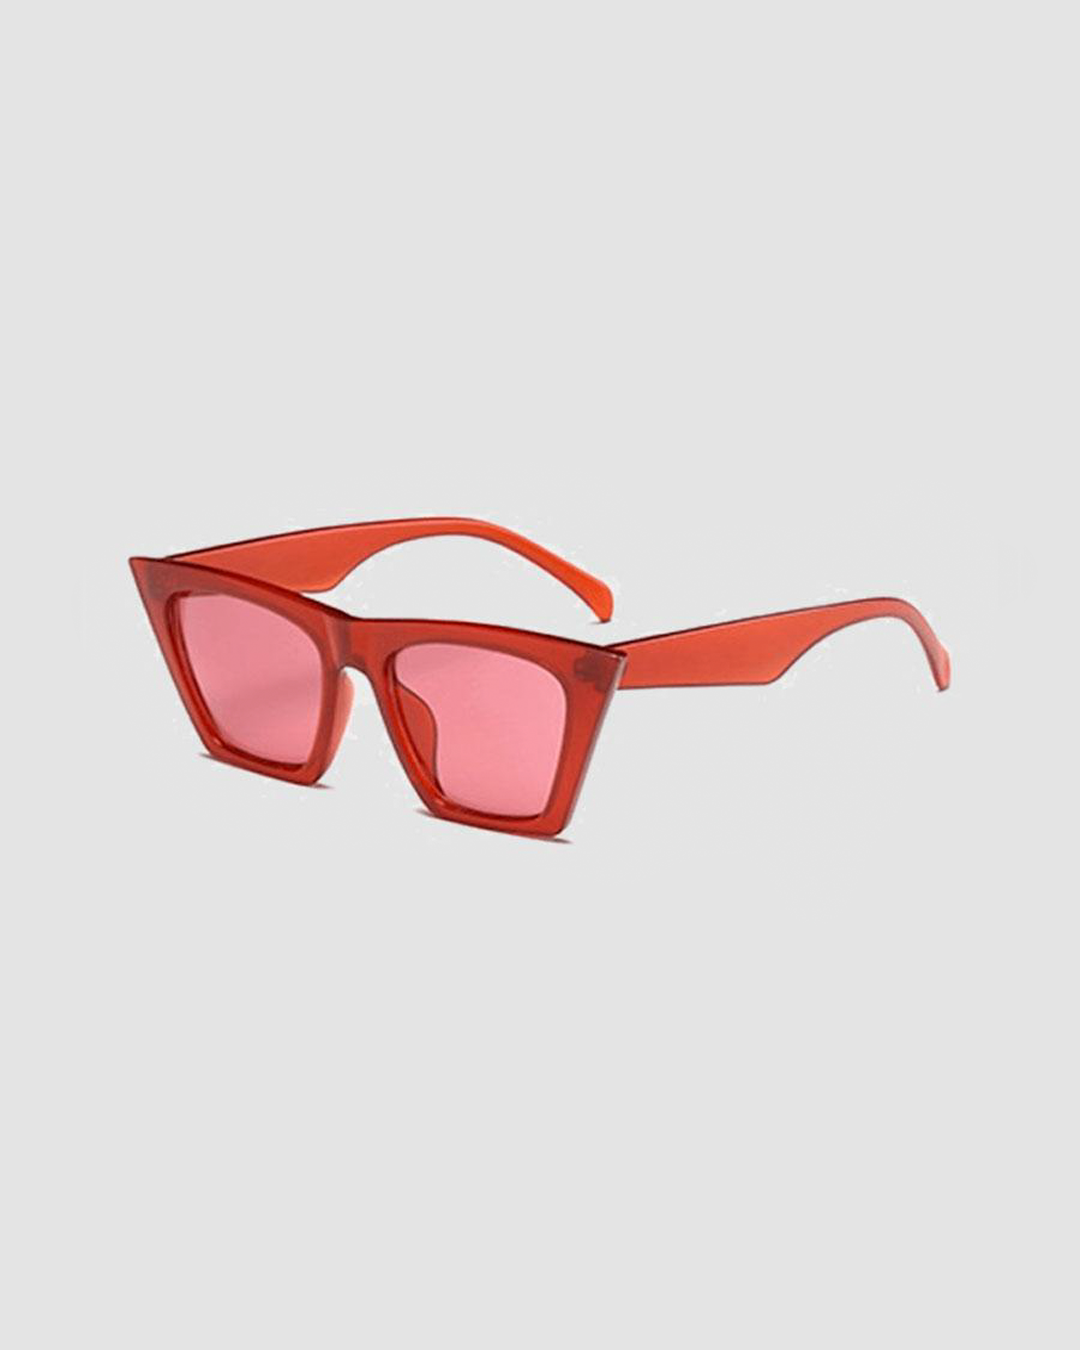 Hoover Sunglasses